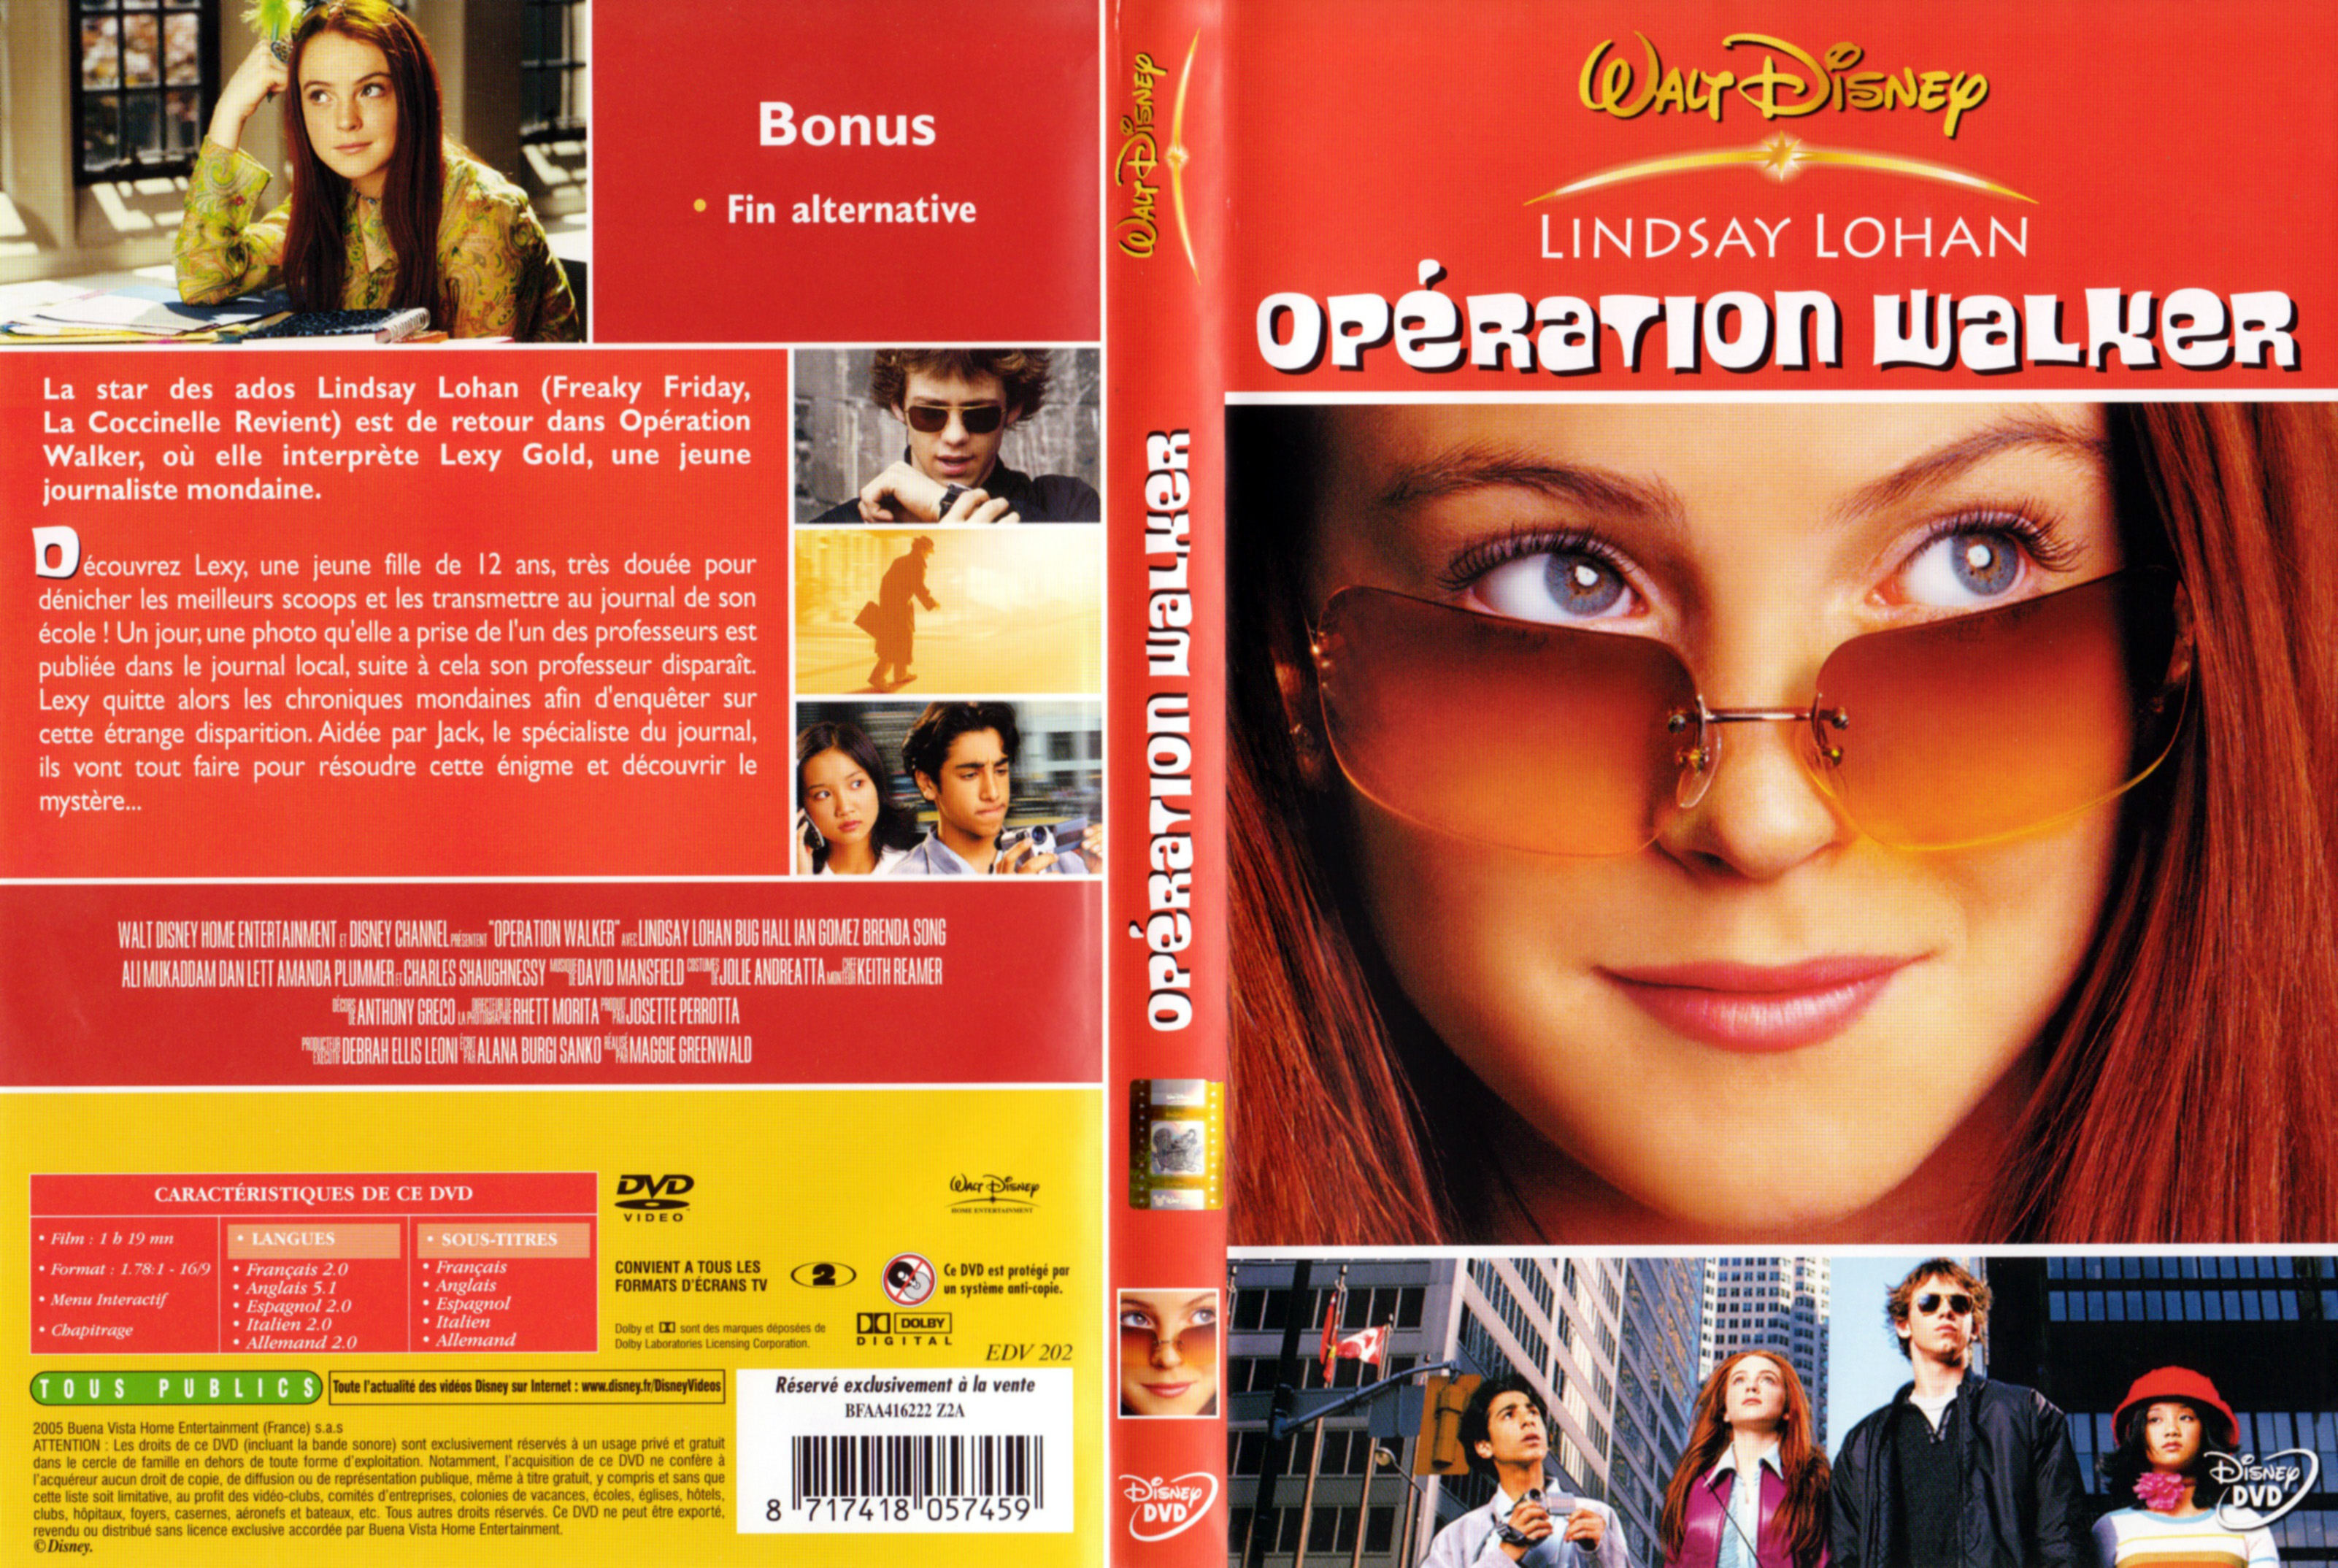 Jaquette DVD Opration Walker